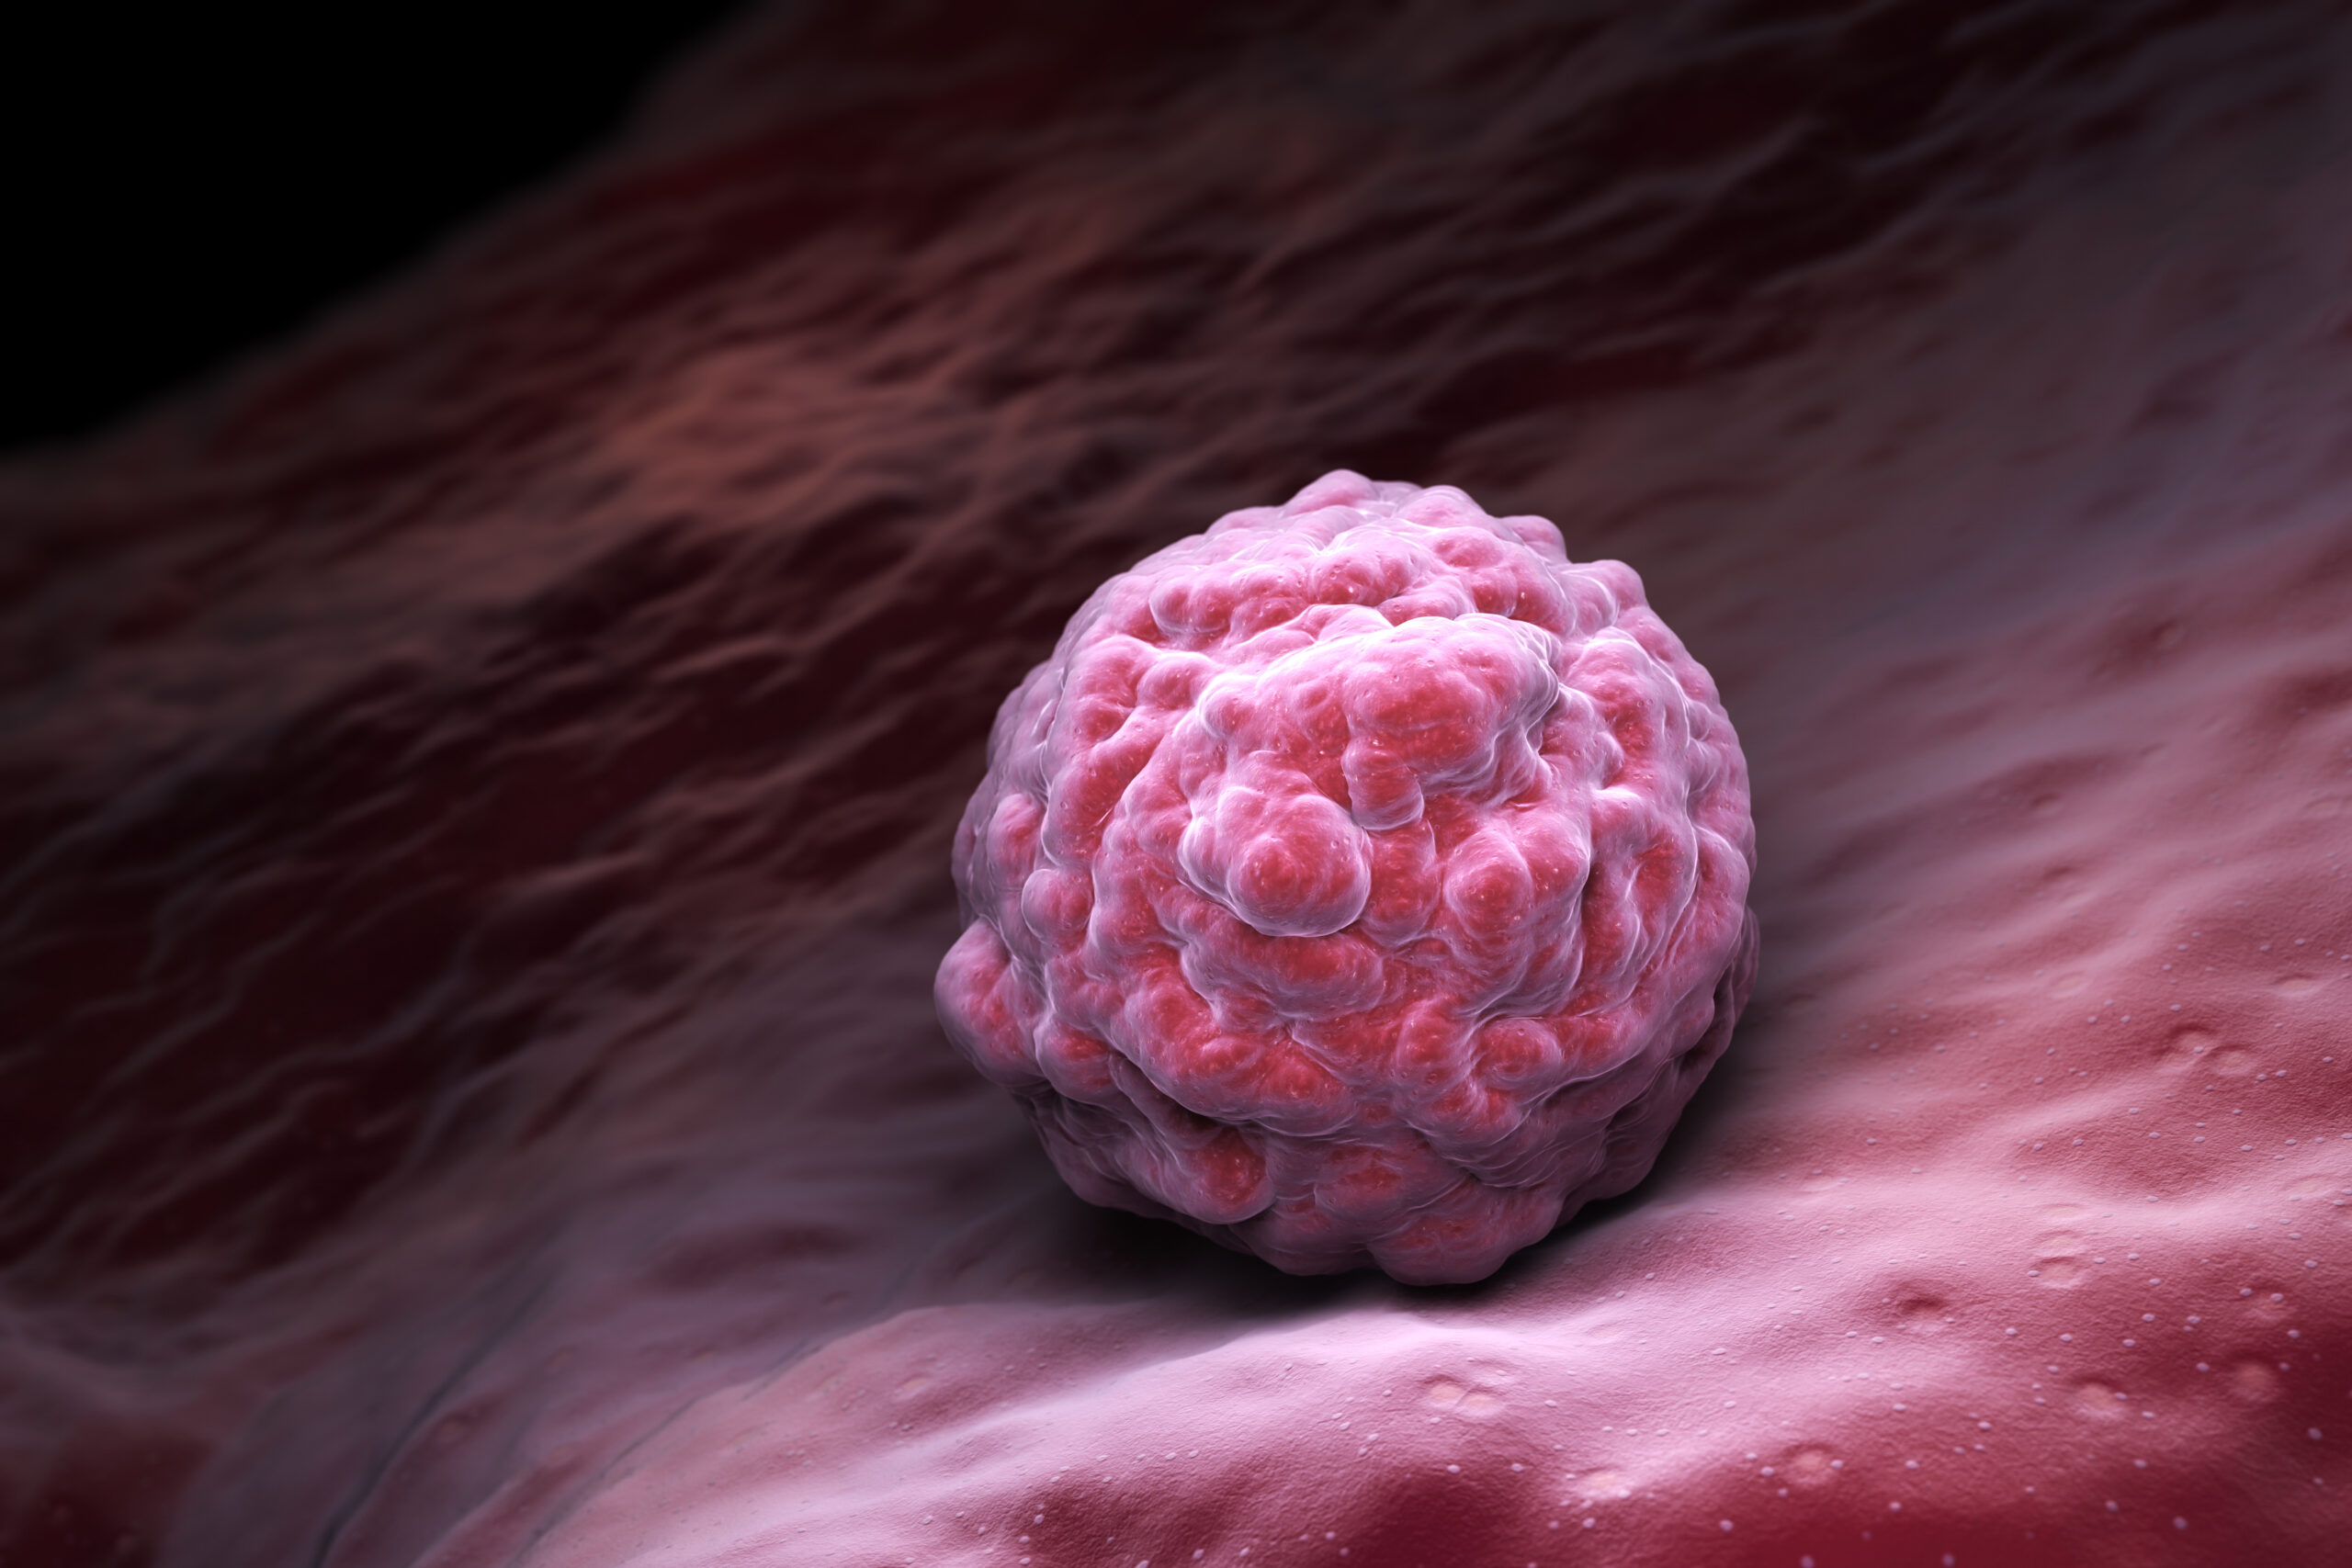 Cancer cells vs embryonic stem cells